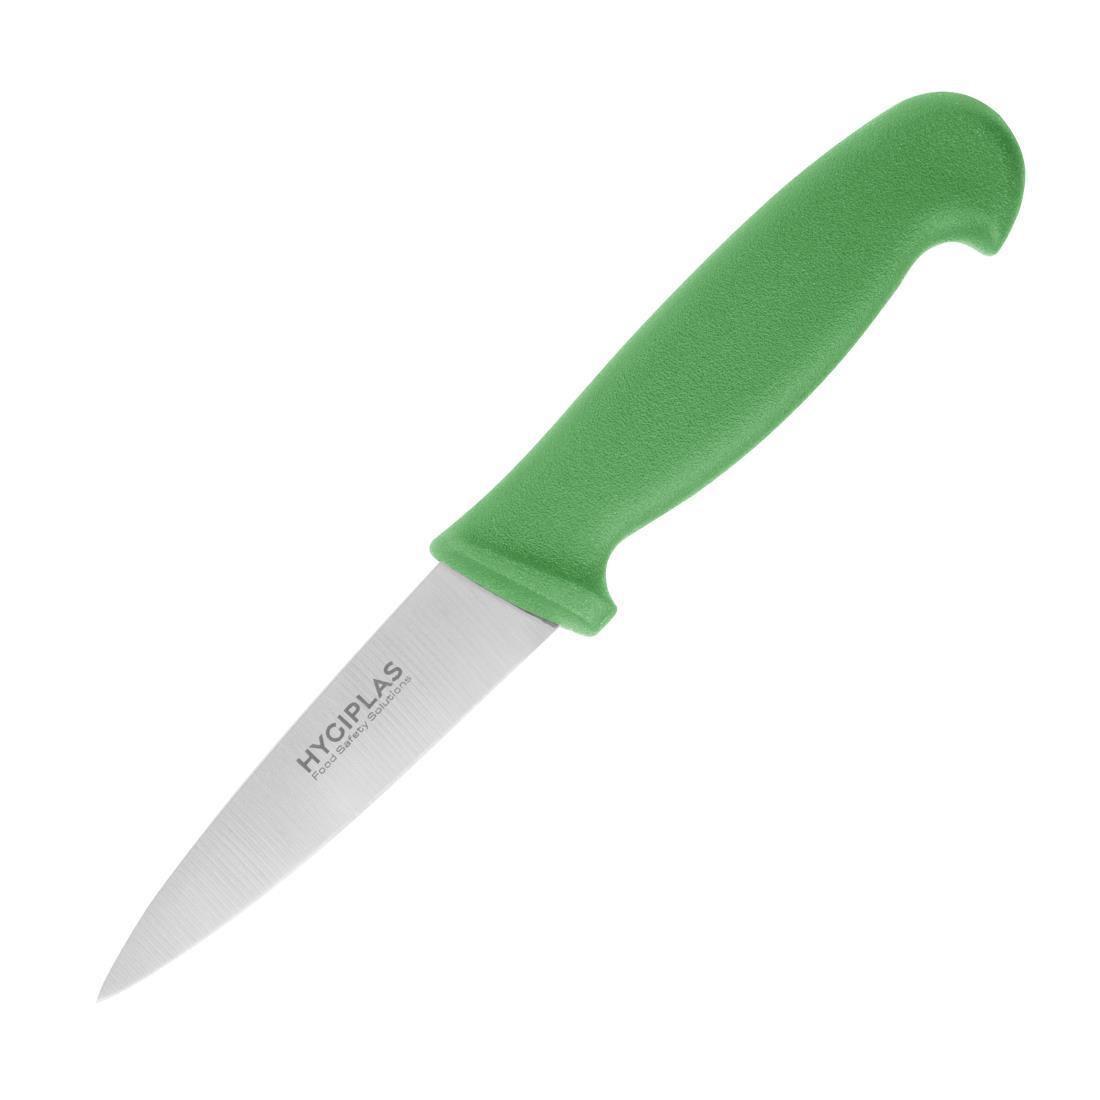 Hygiplas Paring Knife Green 9cm - C866  - 1